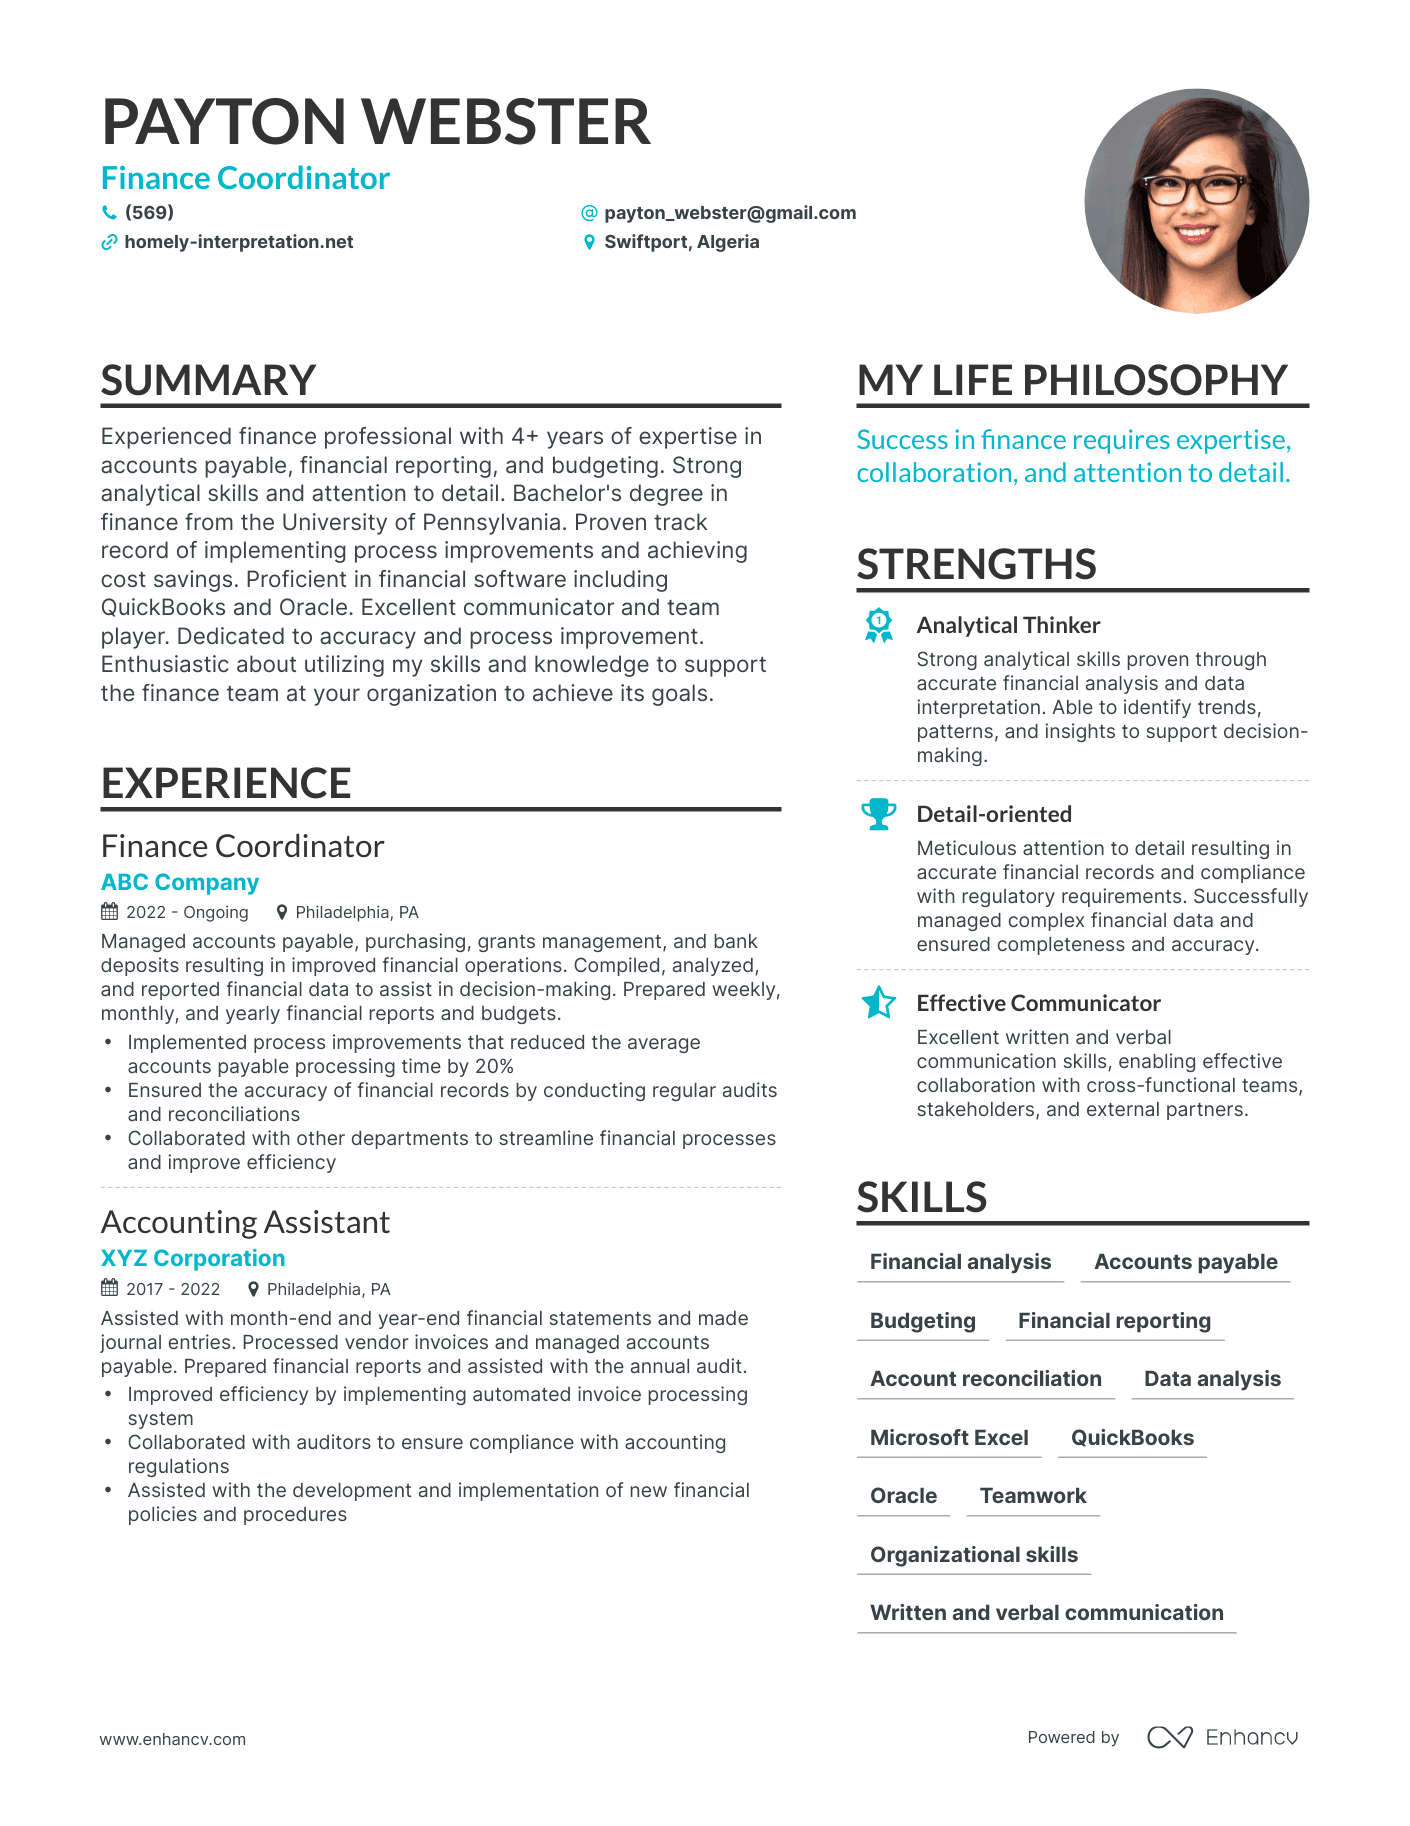 Finance Coordinator resume example